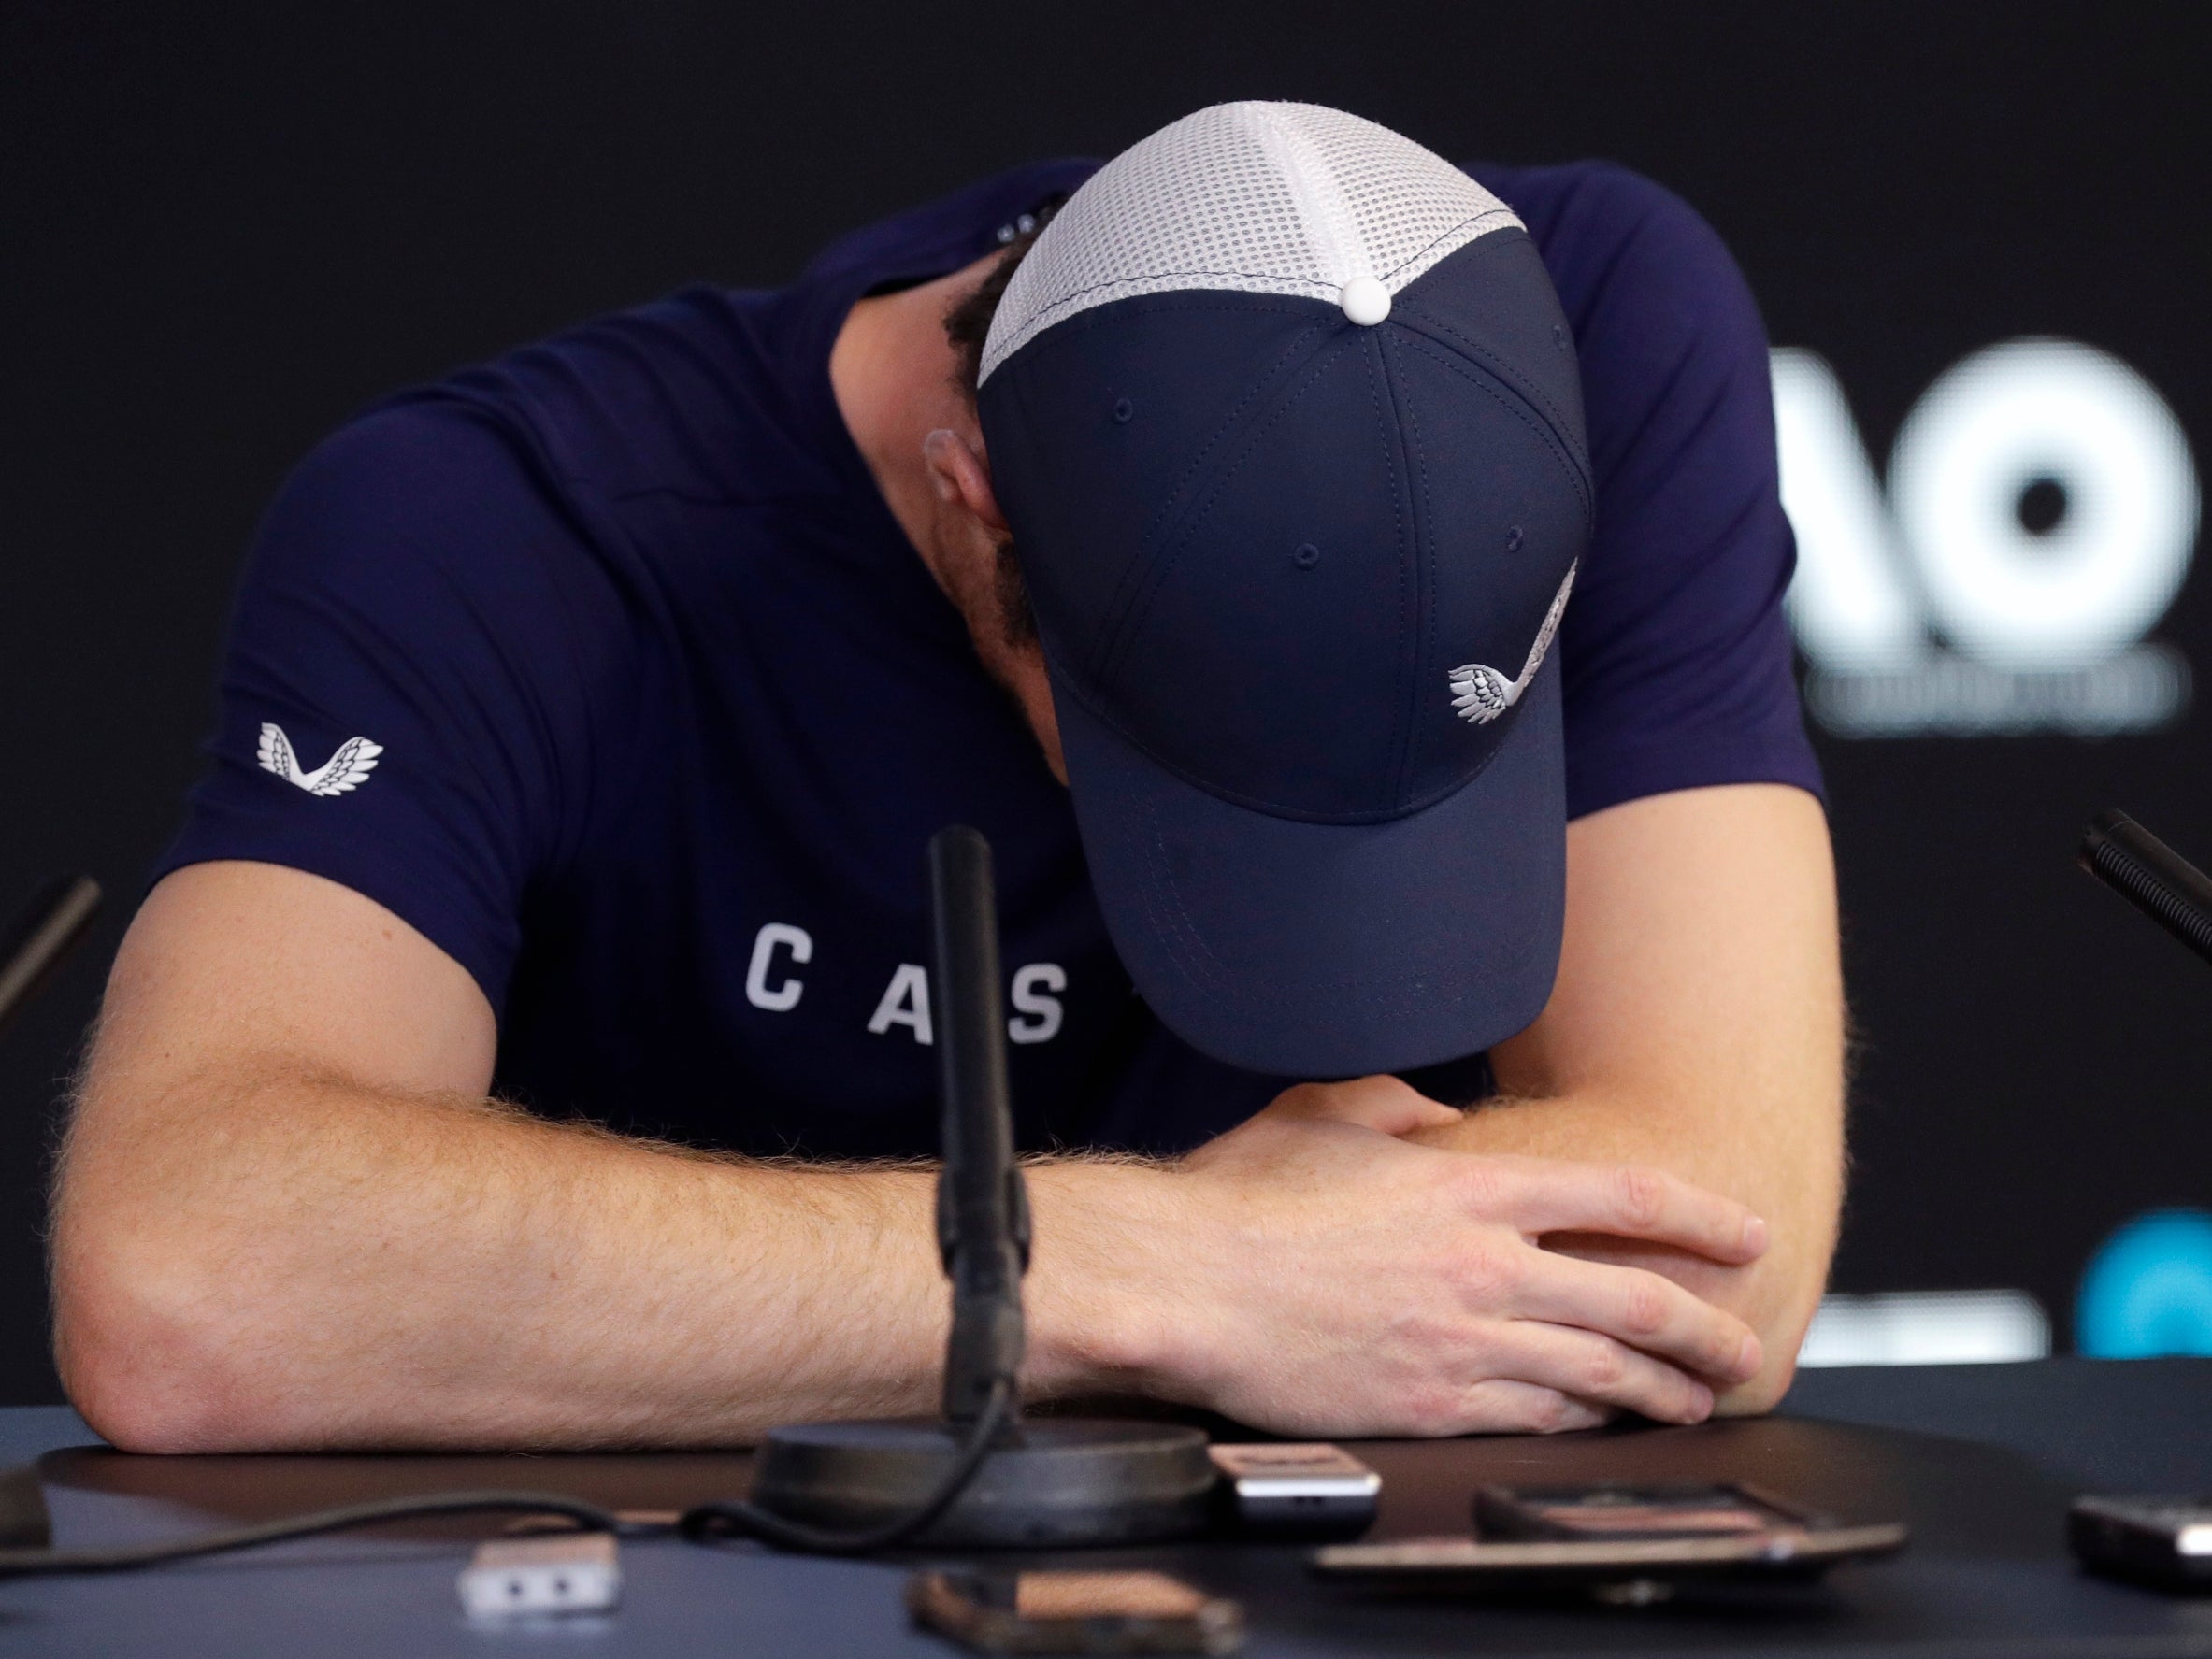 Murray broke down in tears as he revealed his retirement plans